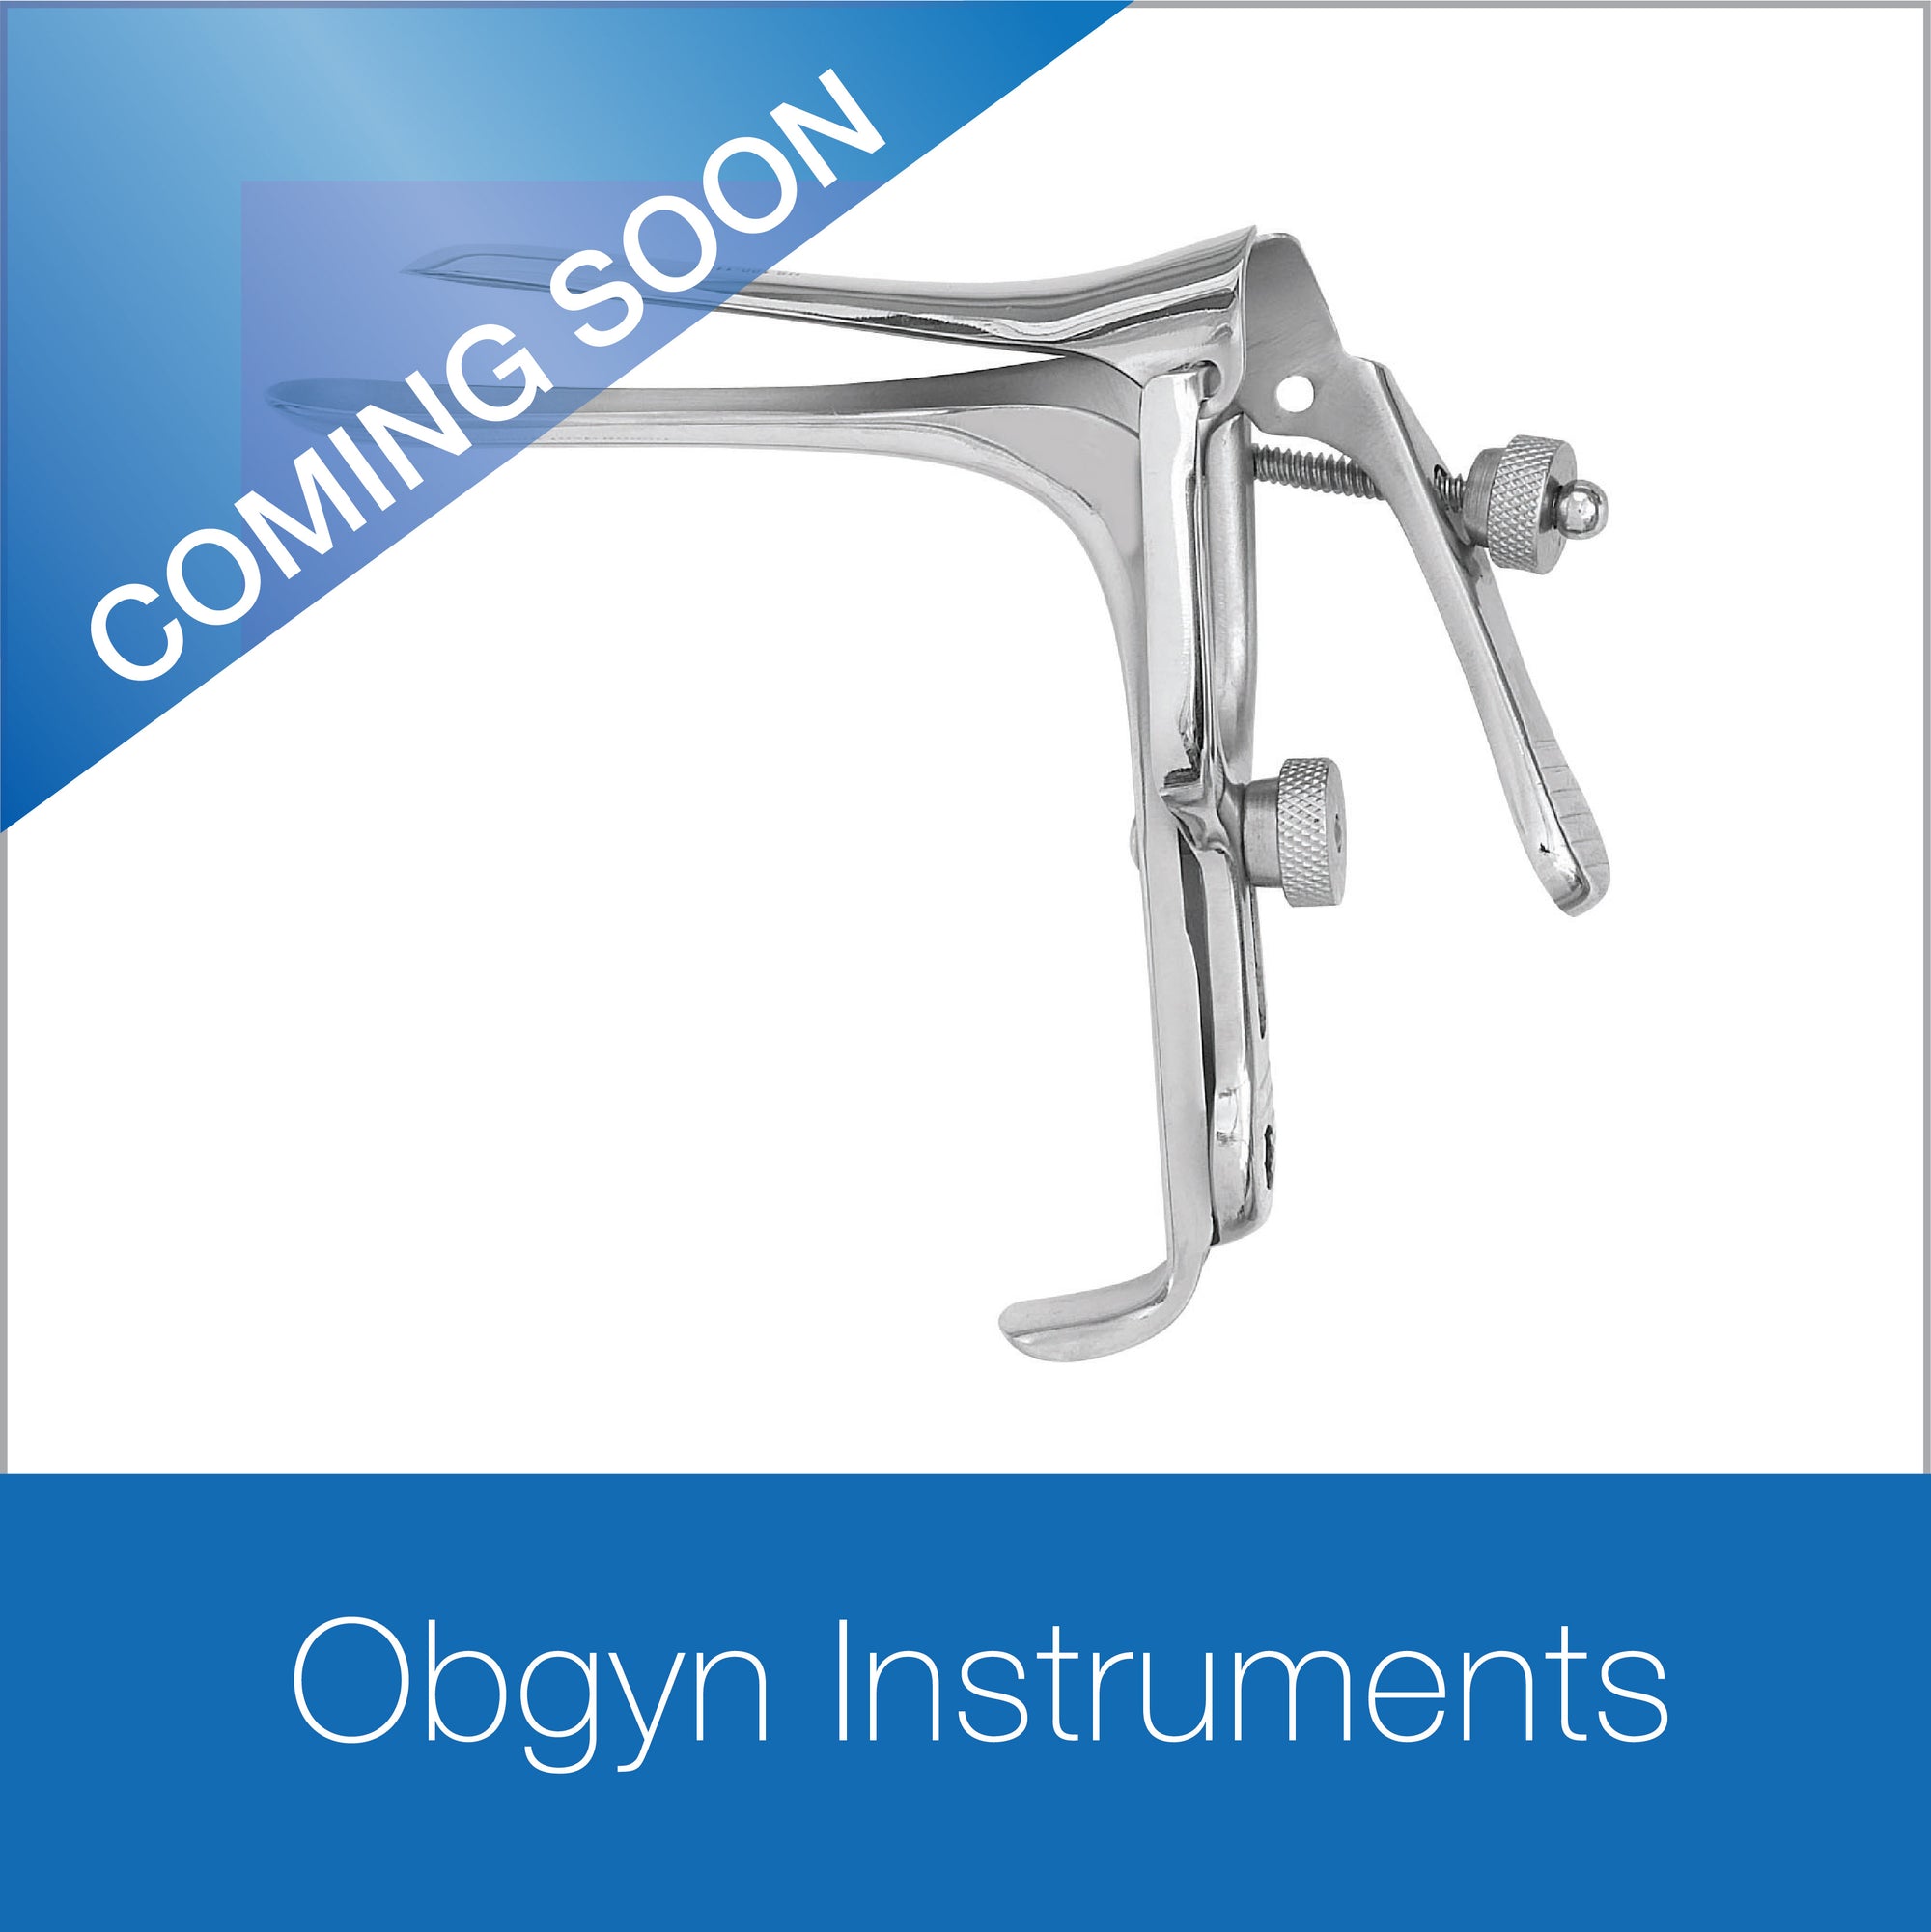 Obgyn Instruments